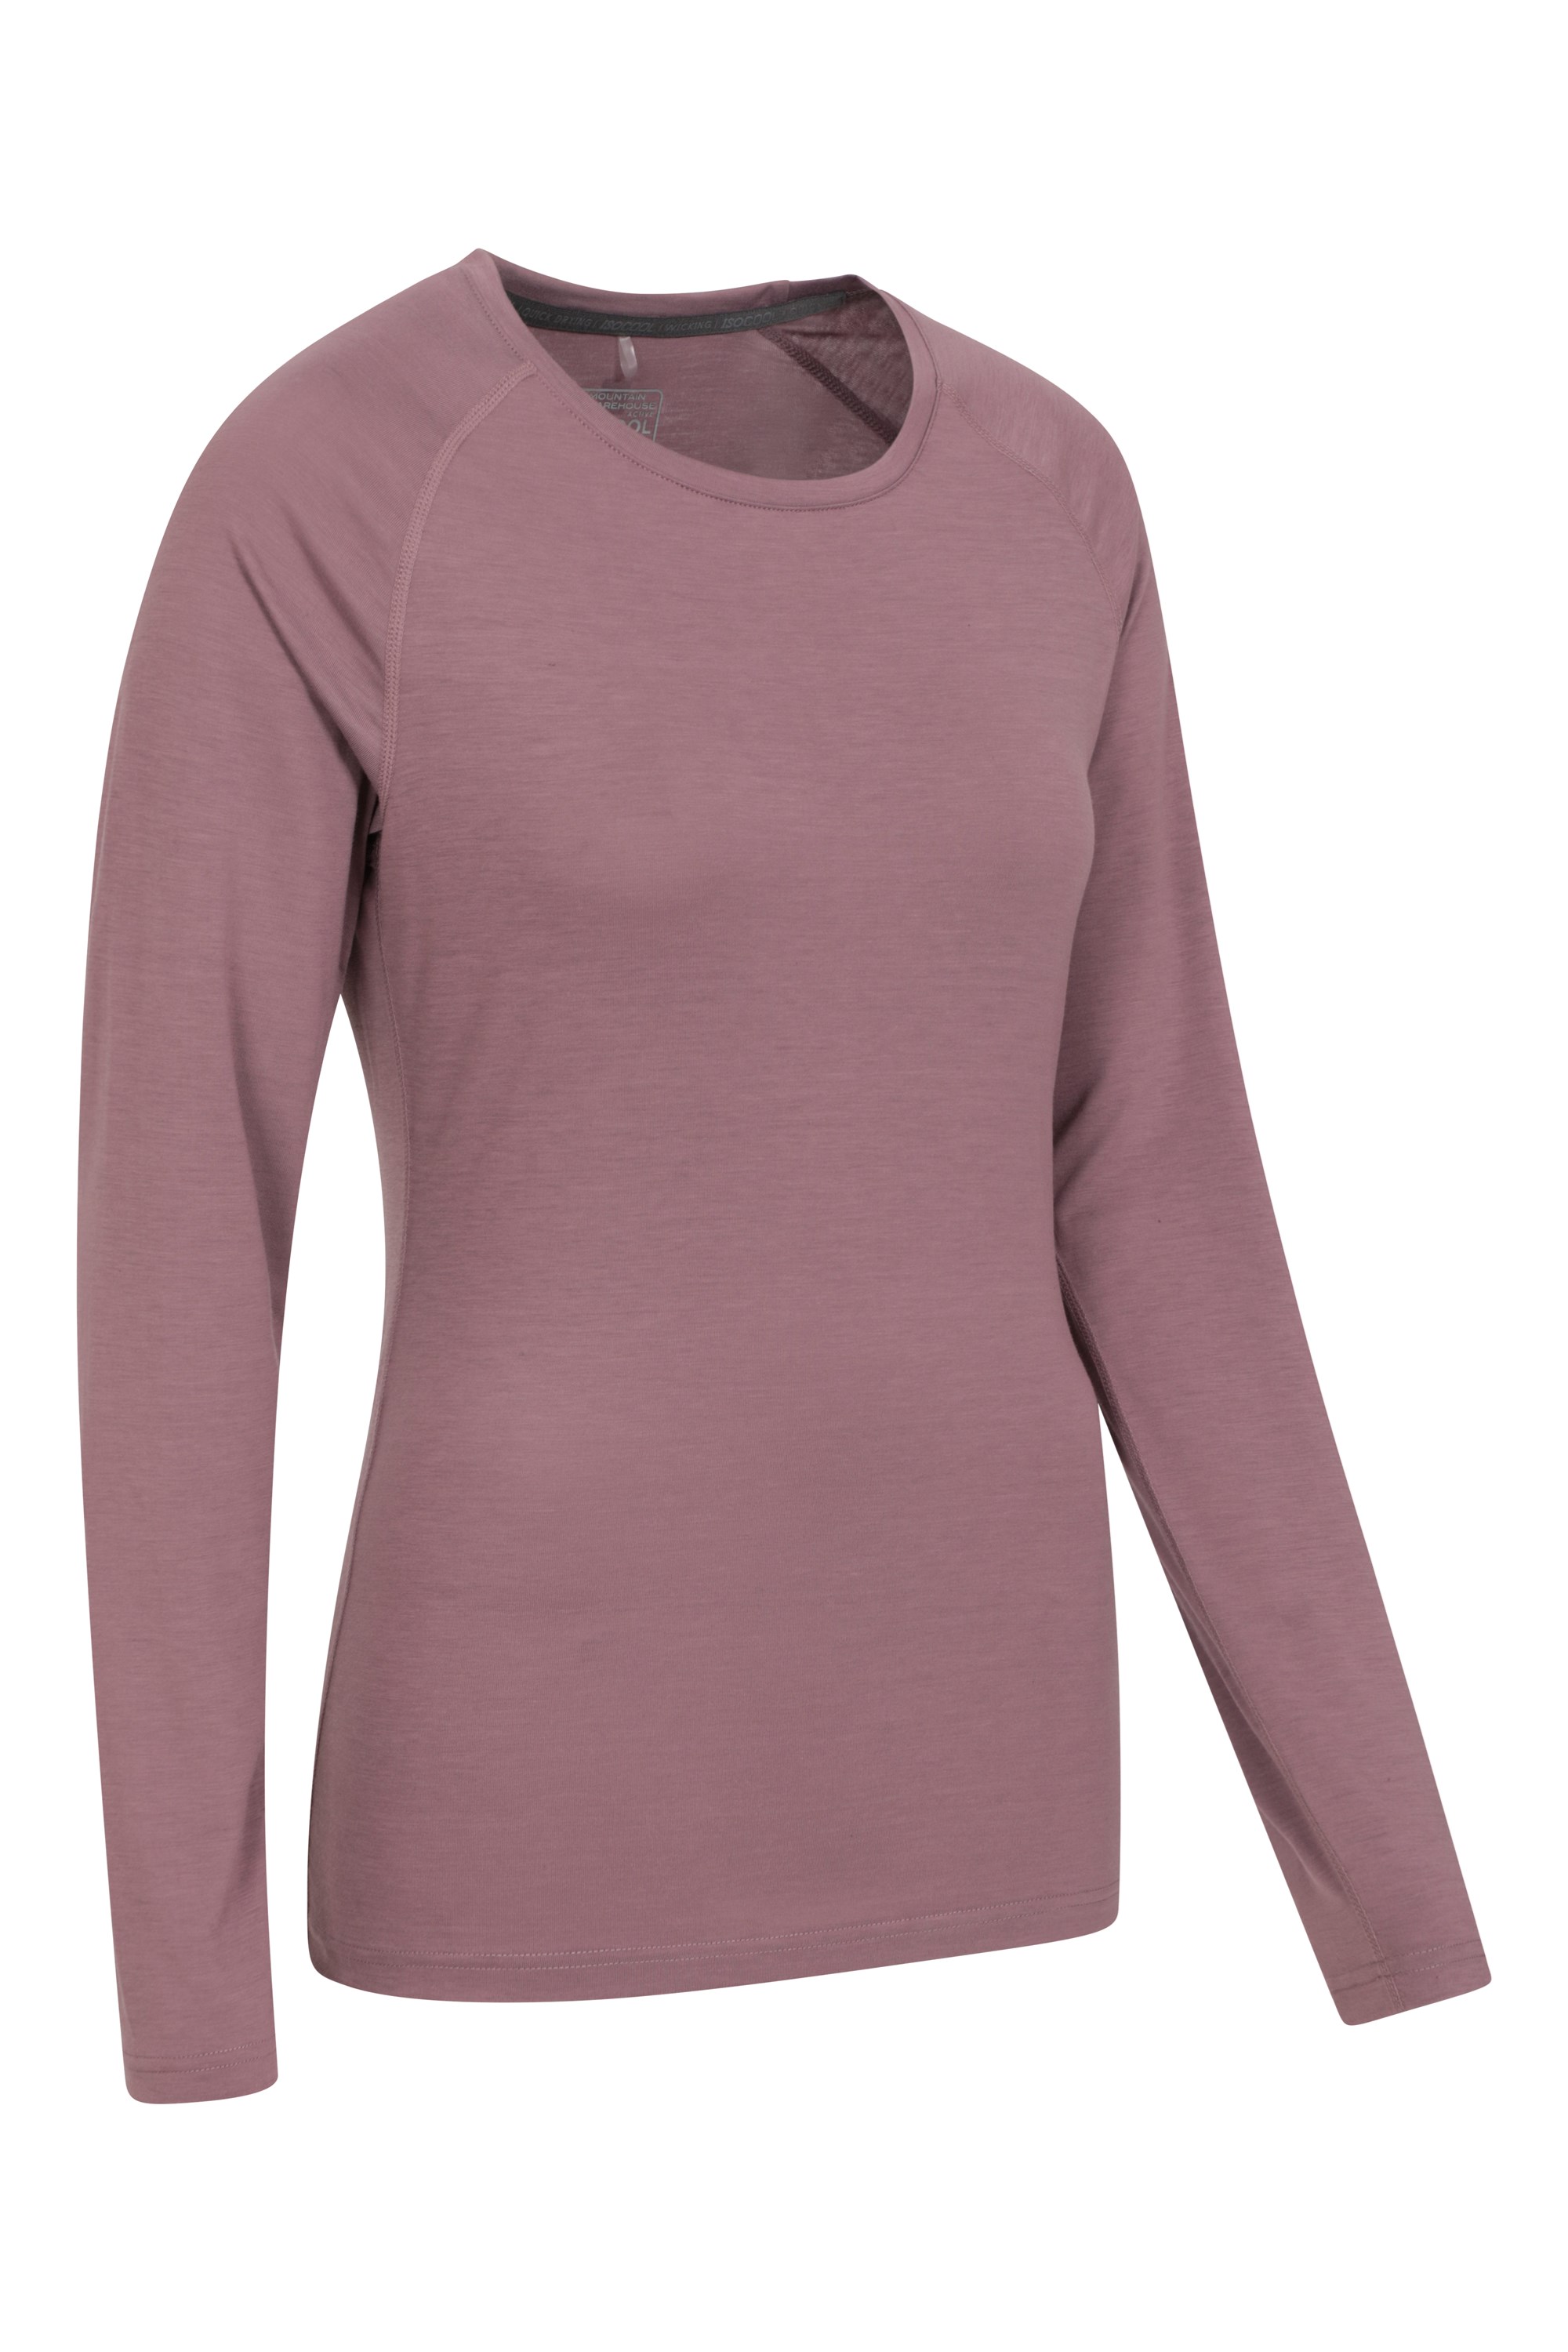 Pink long sleeve T-Shirt with stars 11-12yrs Mountain Warehouse Mountain Warehouse 